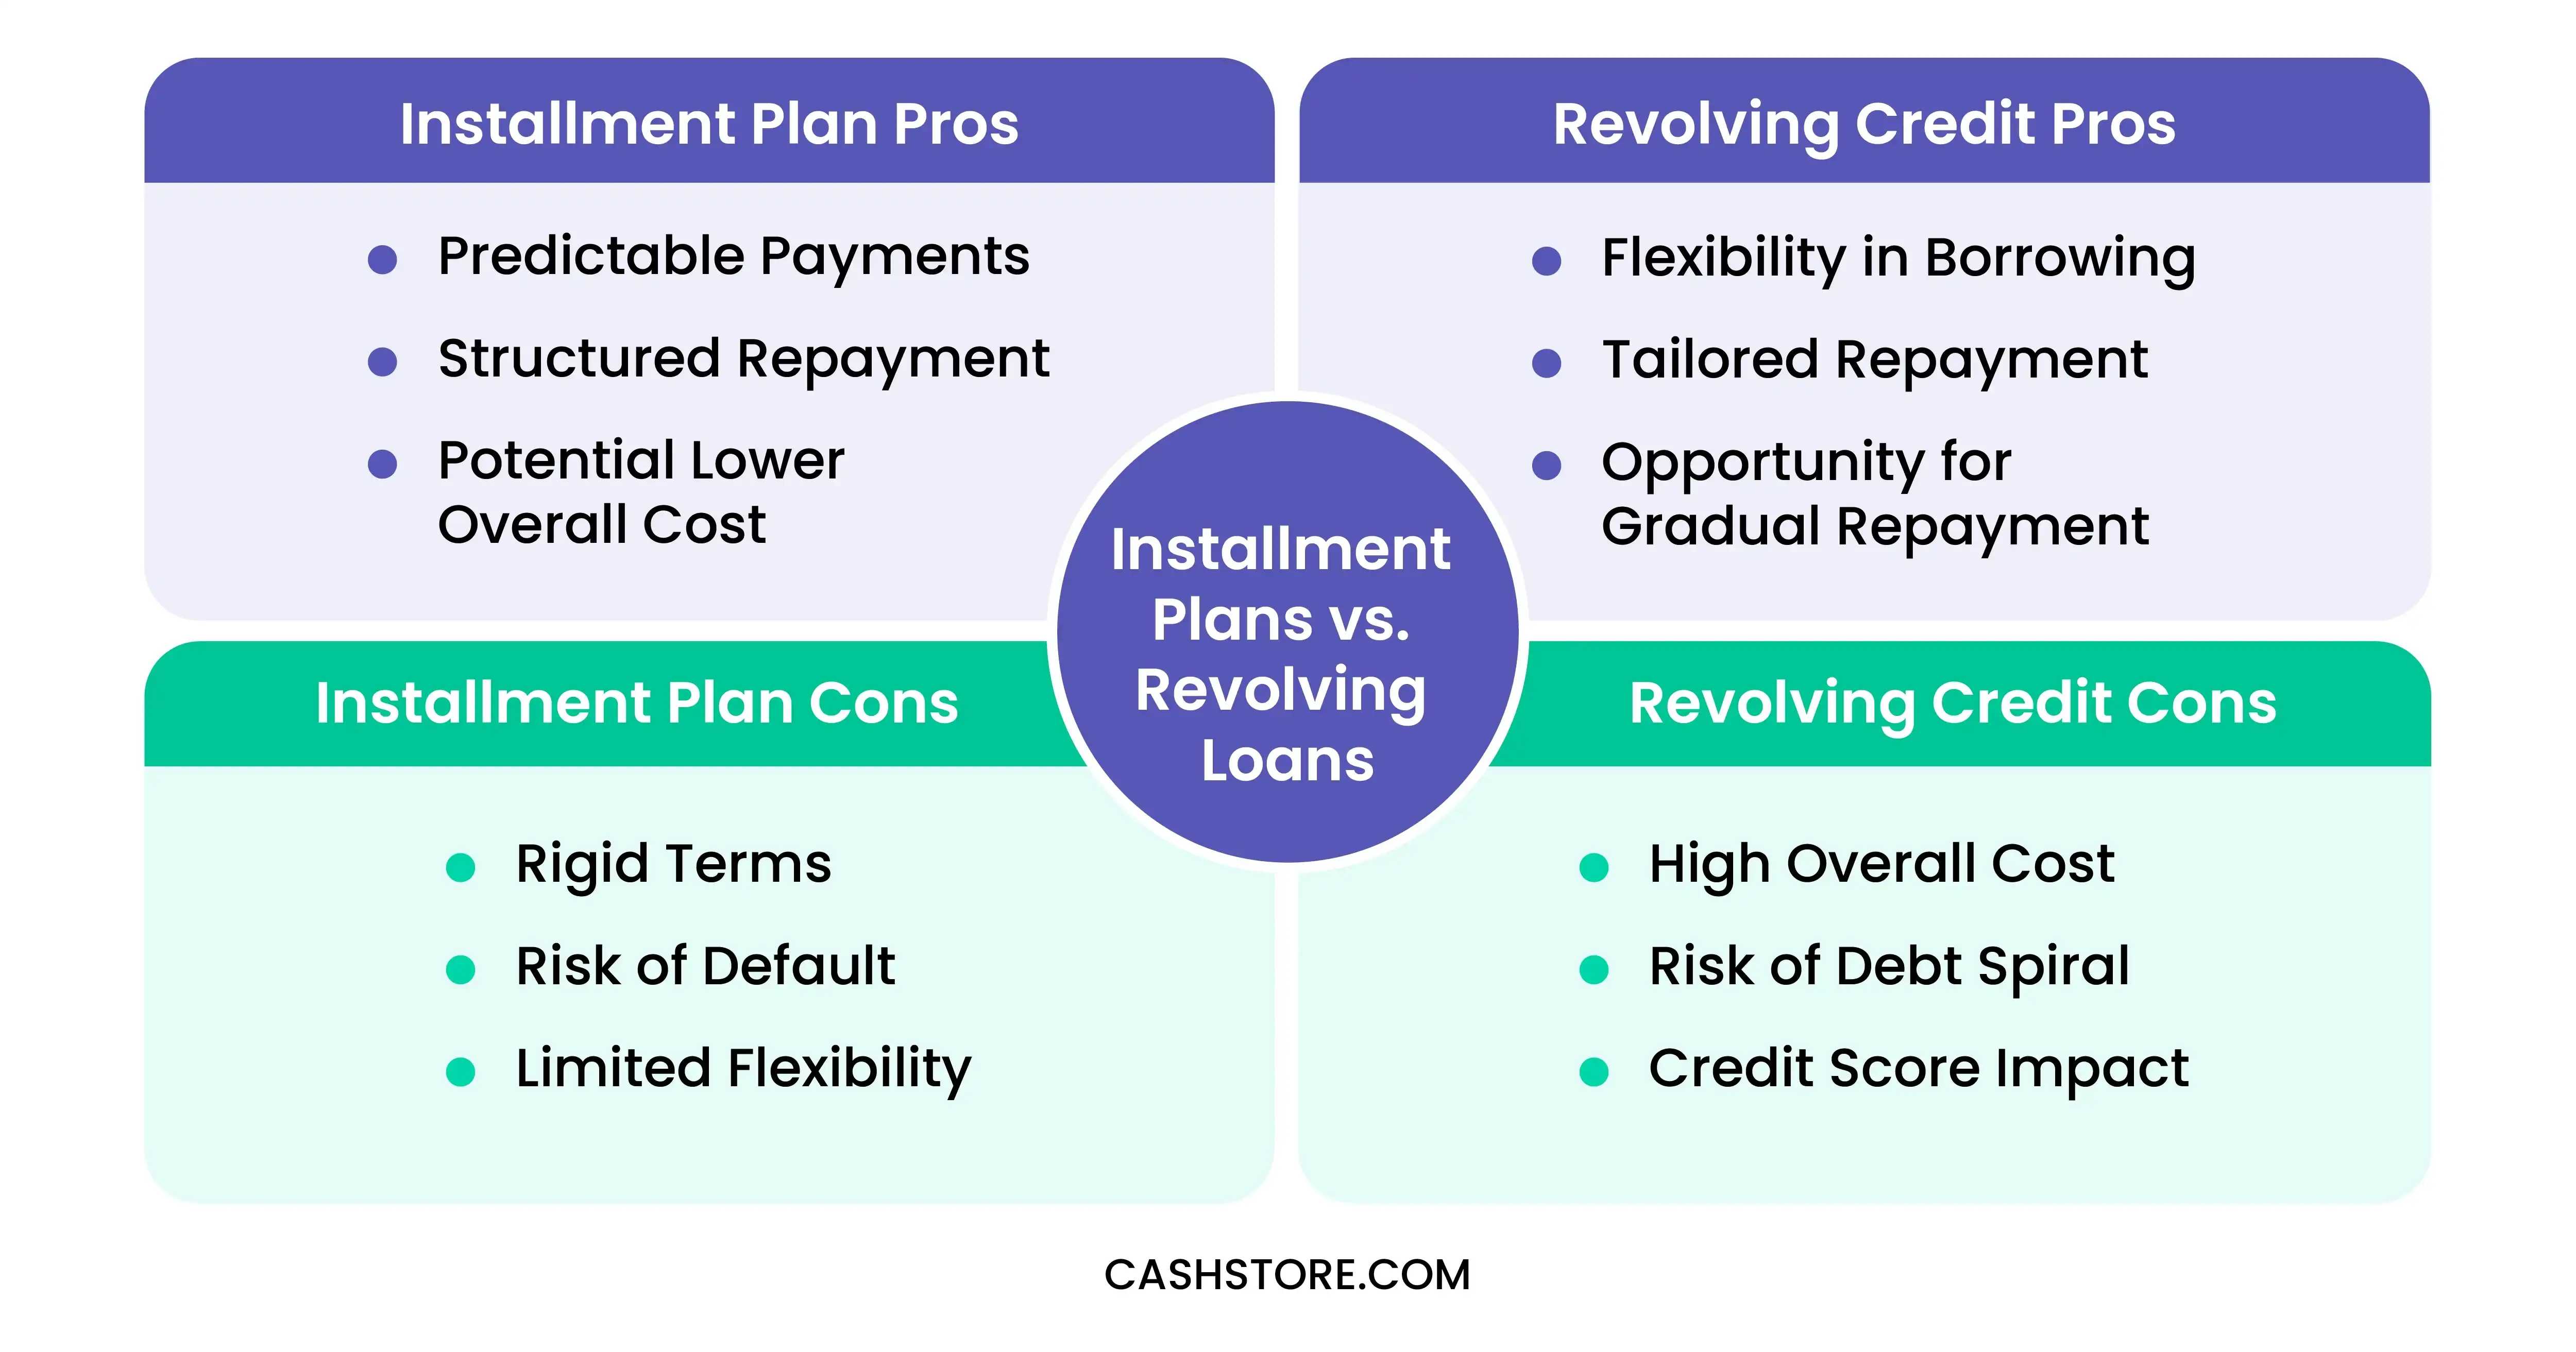 Installment Plans vs. Revolving Loans Pros and Cons